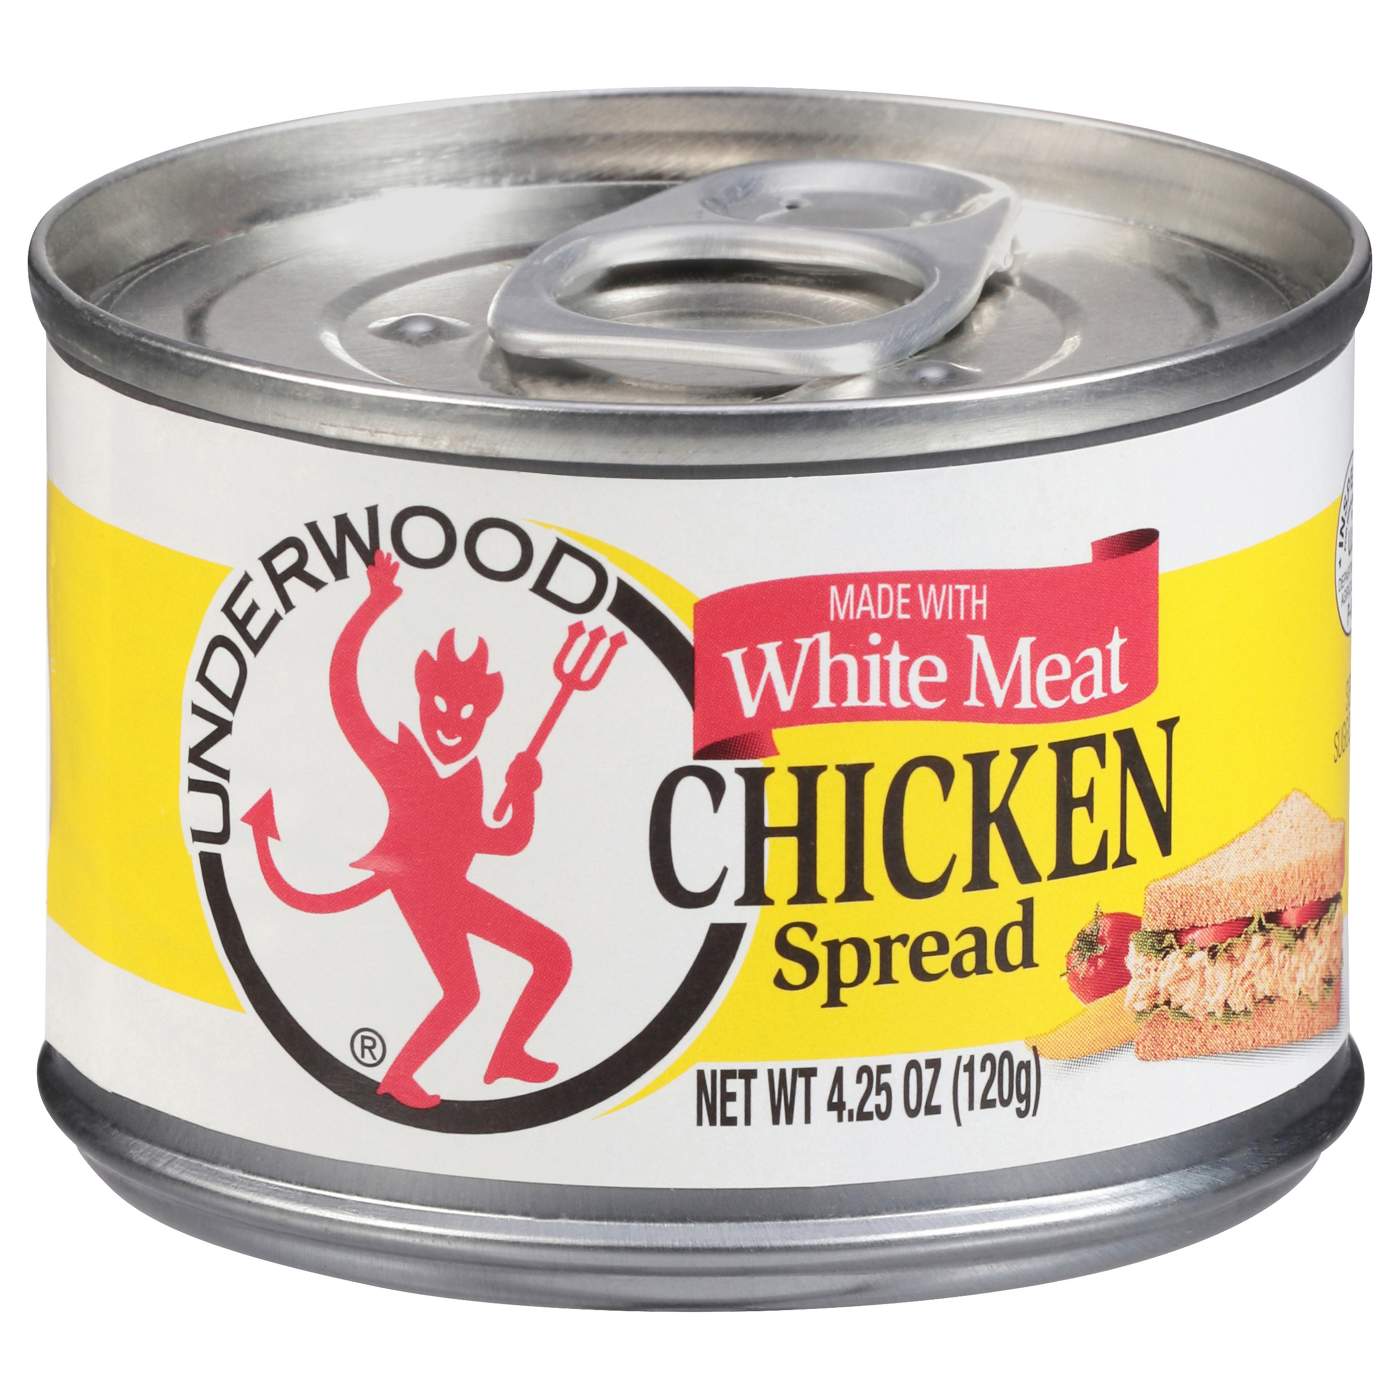 Underwood Chicken Spread; image 1 of 3